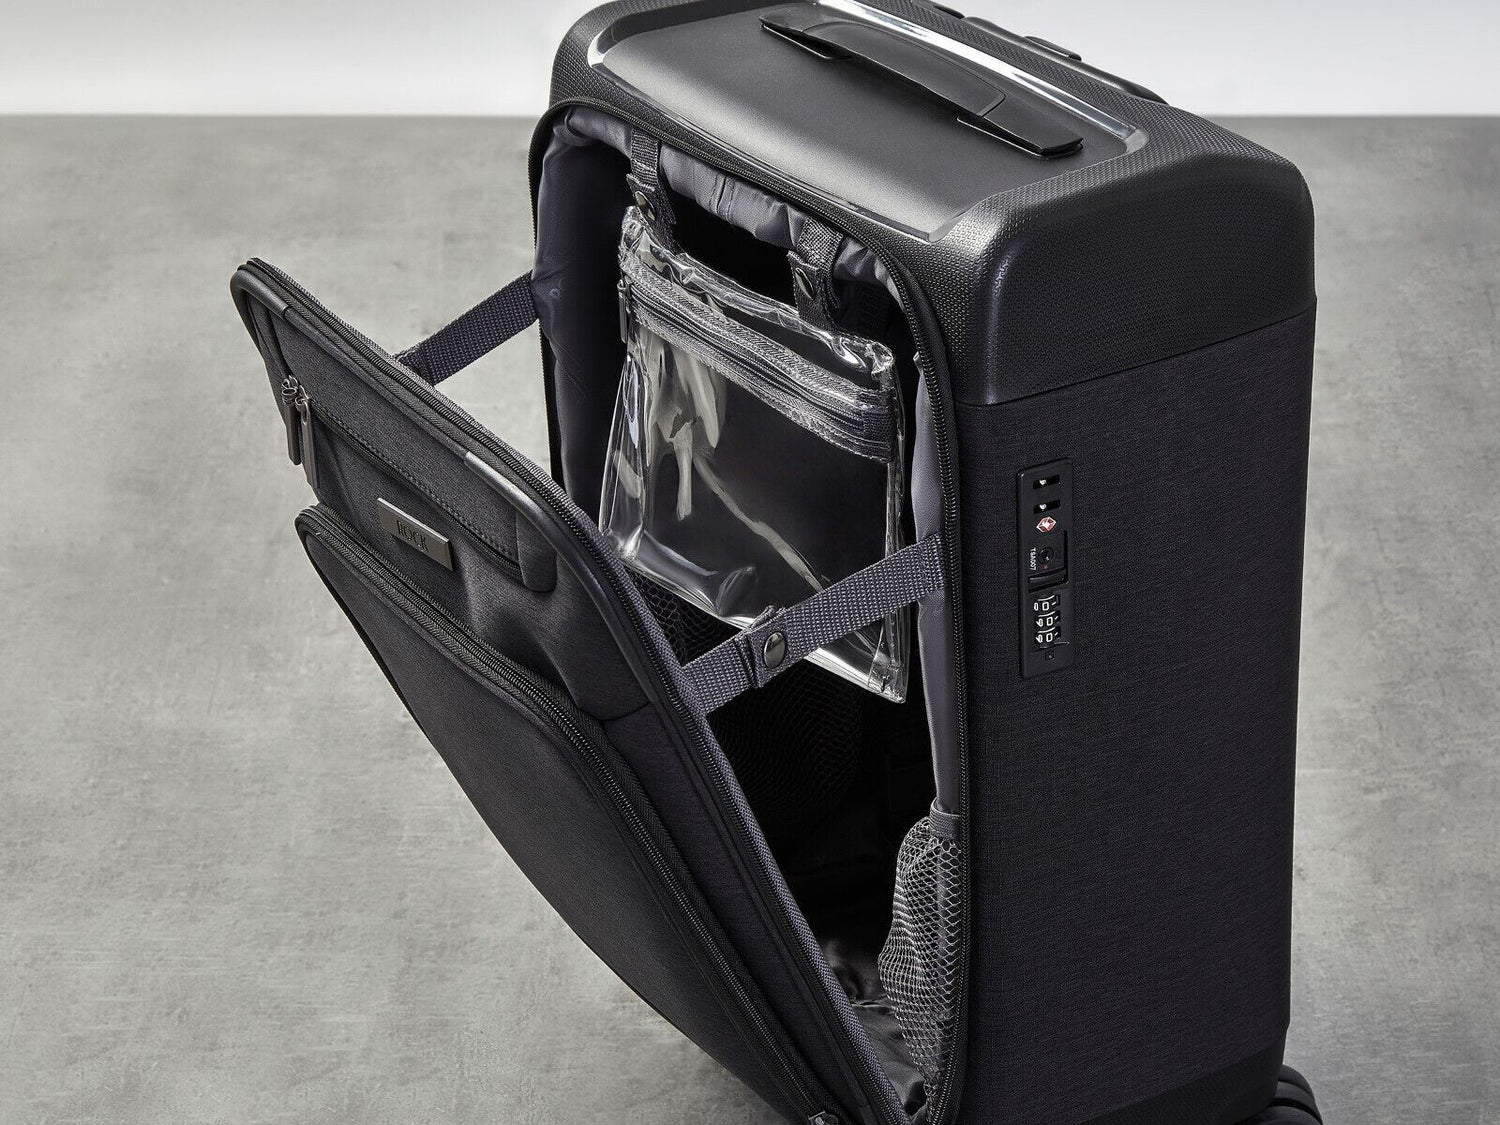 Anniston Medium Soft Shell Suitcase in Black